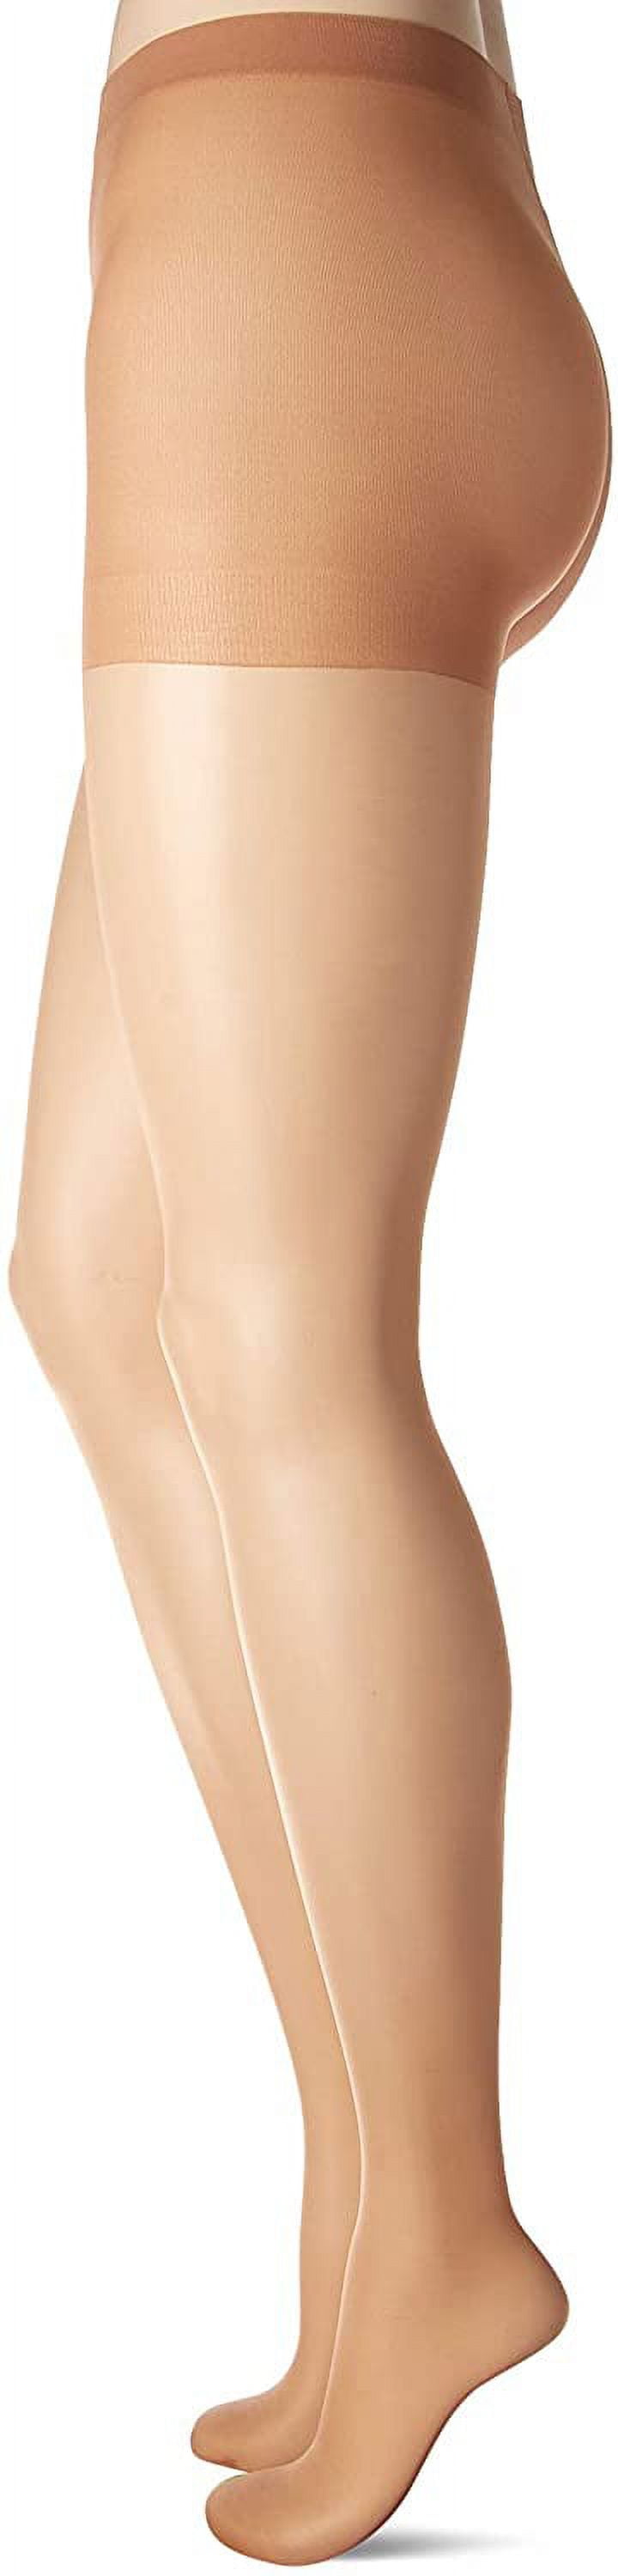 Hanes Women's Silk Reflections Silky Non-Control Top Pantyhose, 6 pairs 